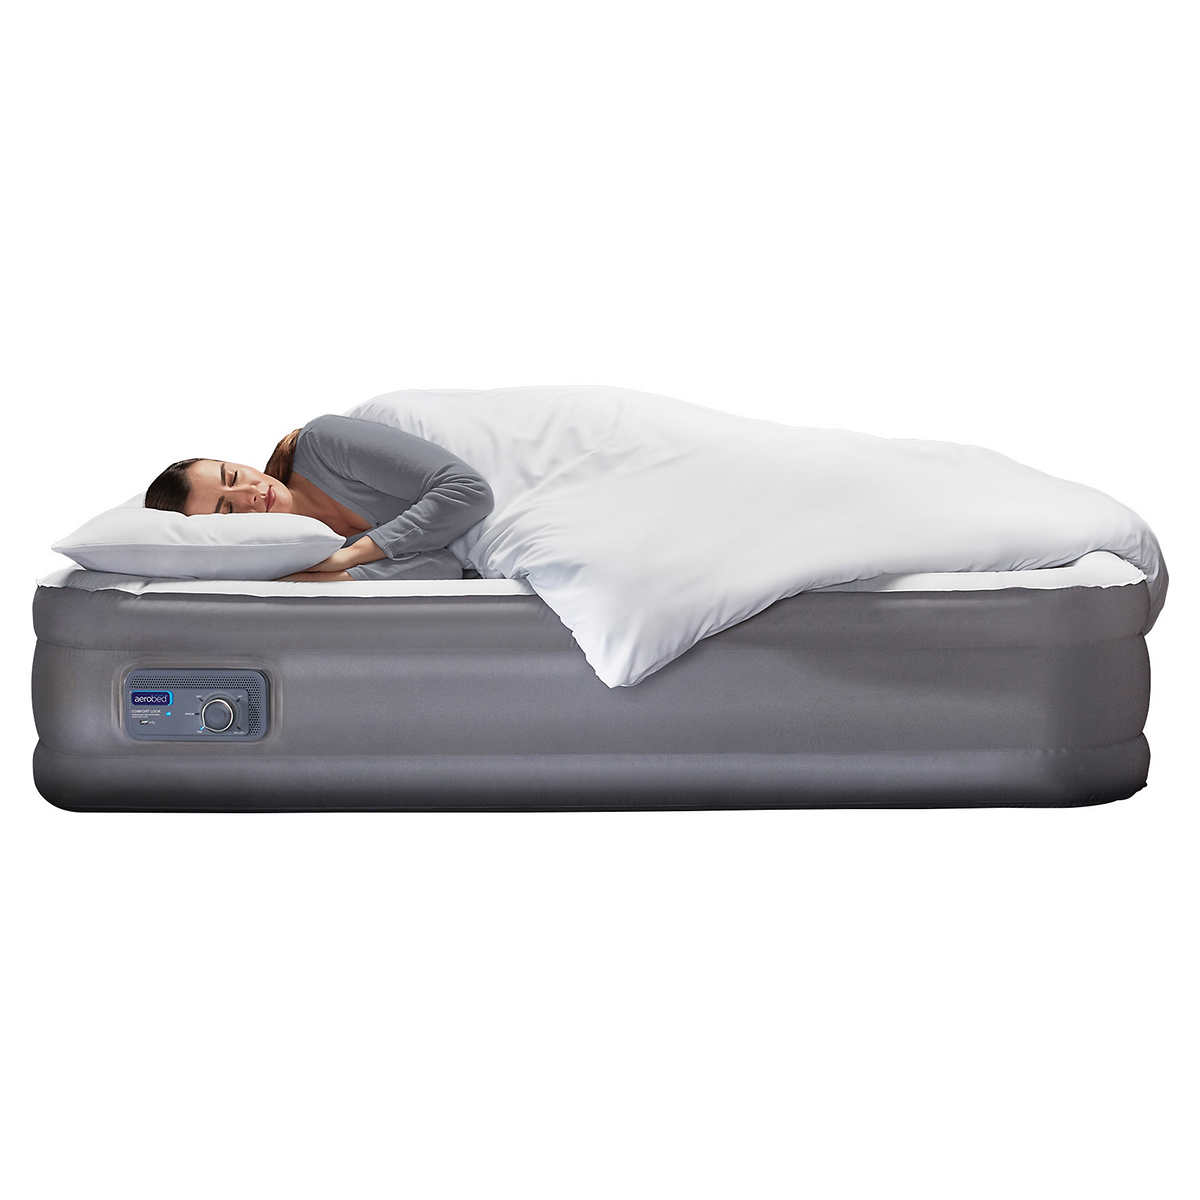 Aerobed Comfort Lock Queen Air Mattress, Serta Perfect Sleeper Air Bed With Headboard